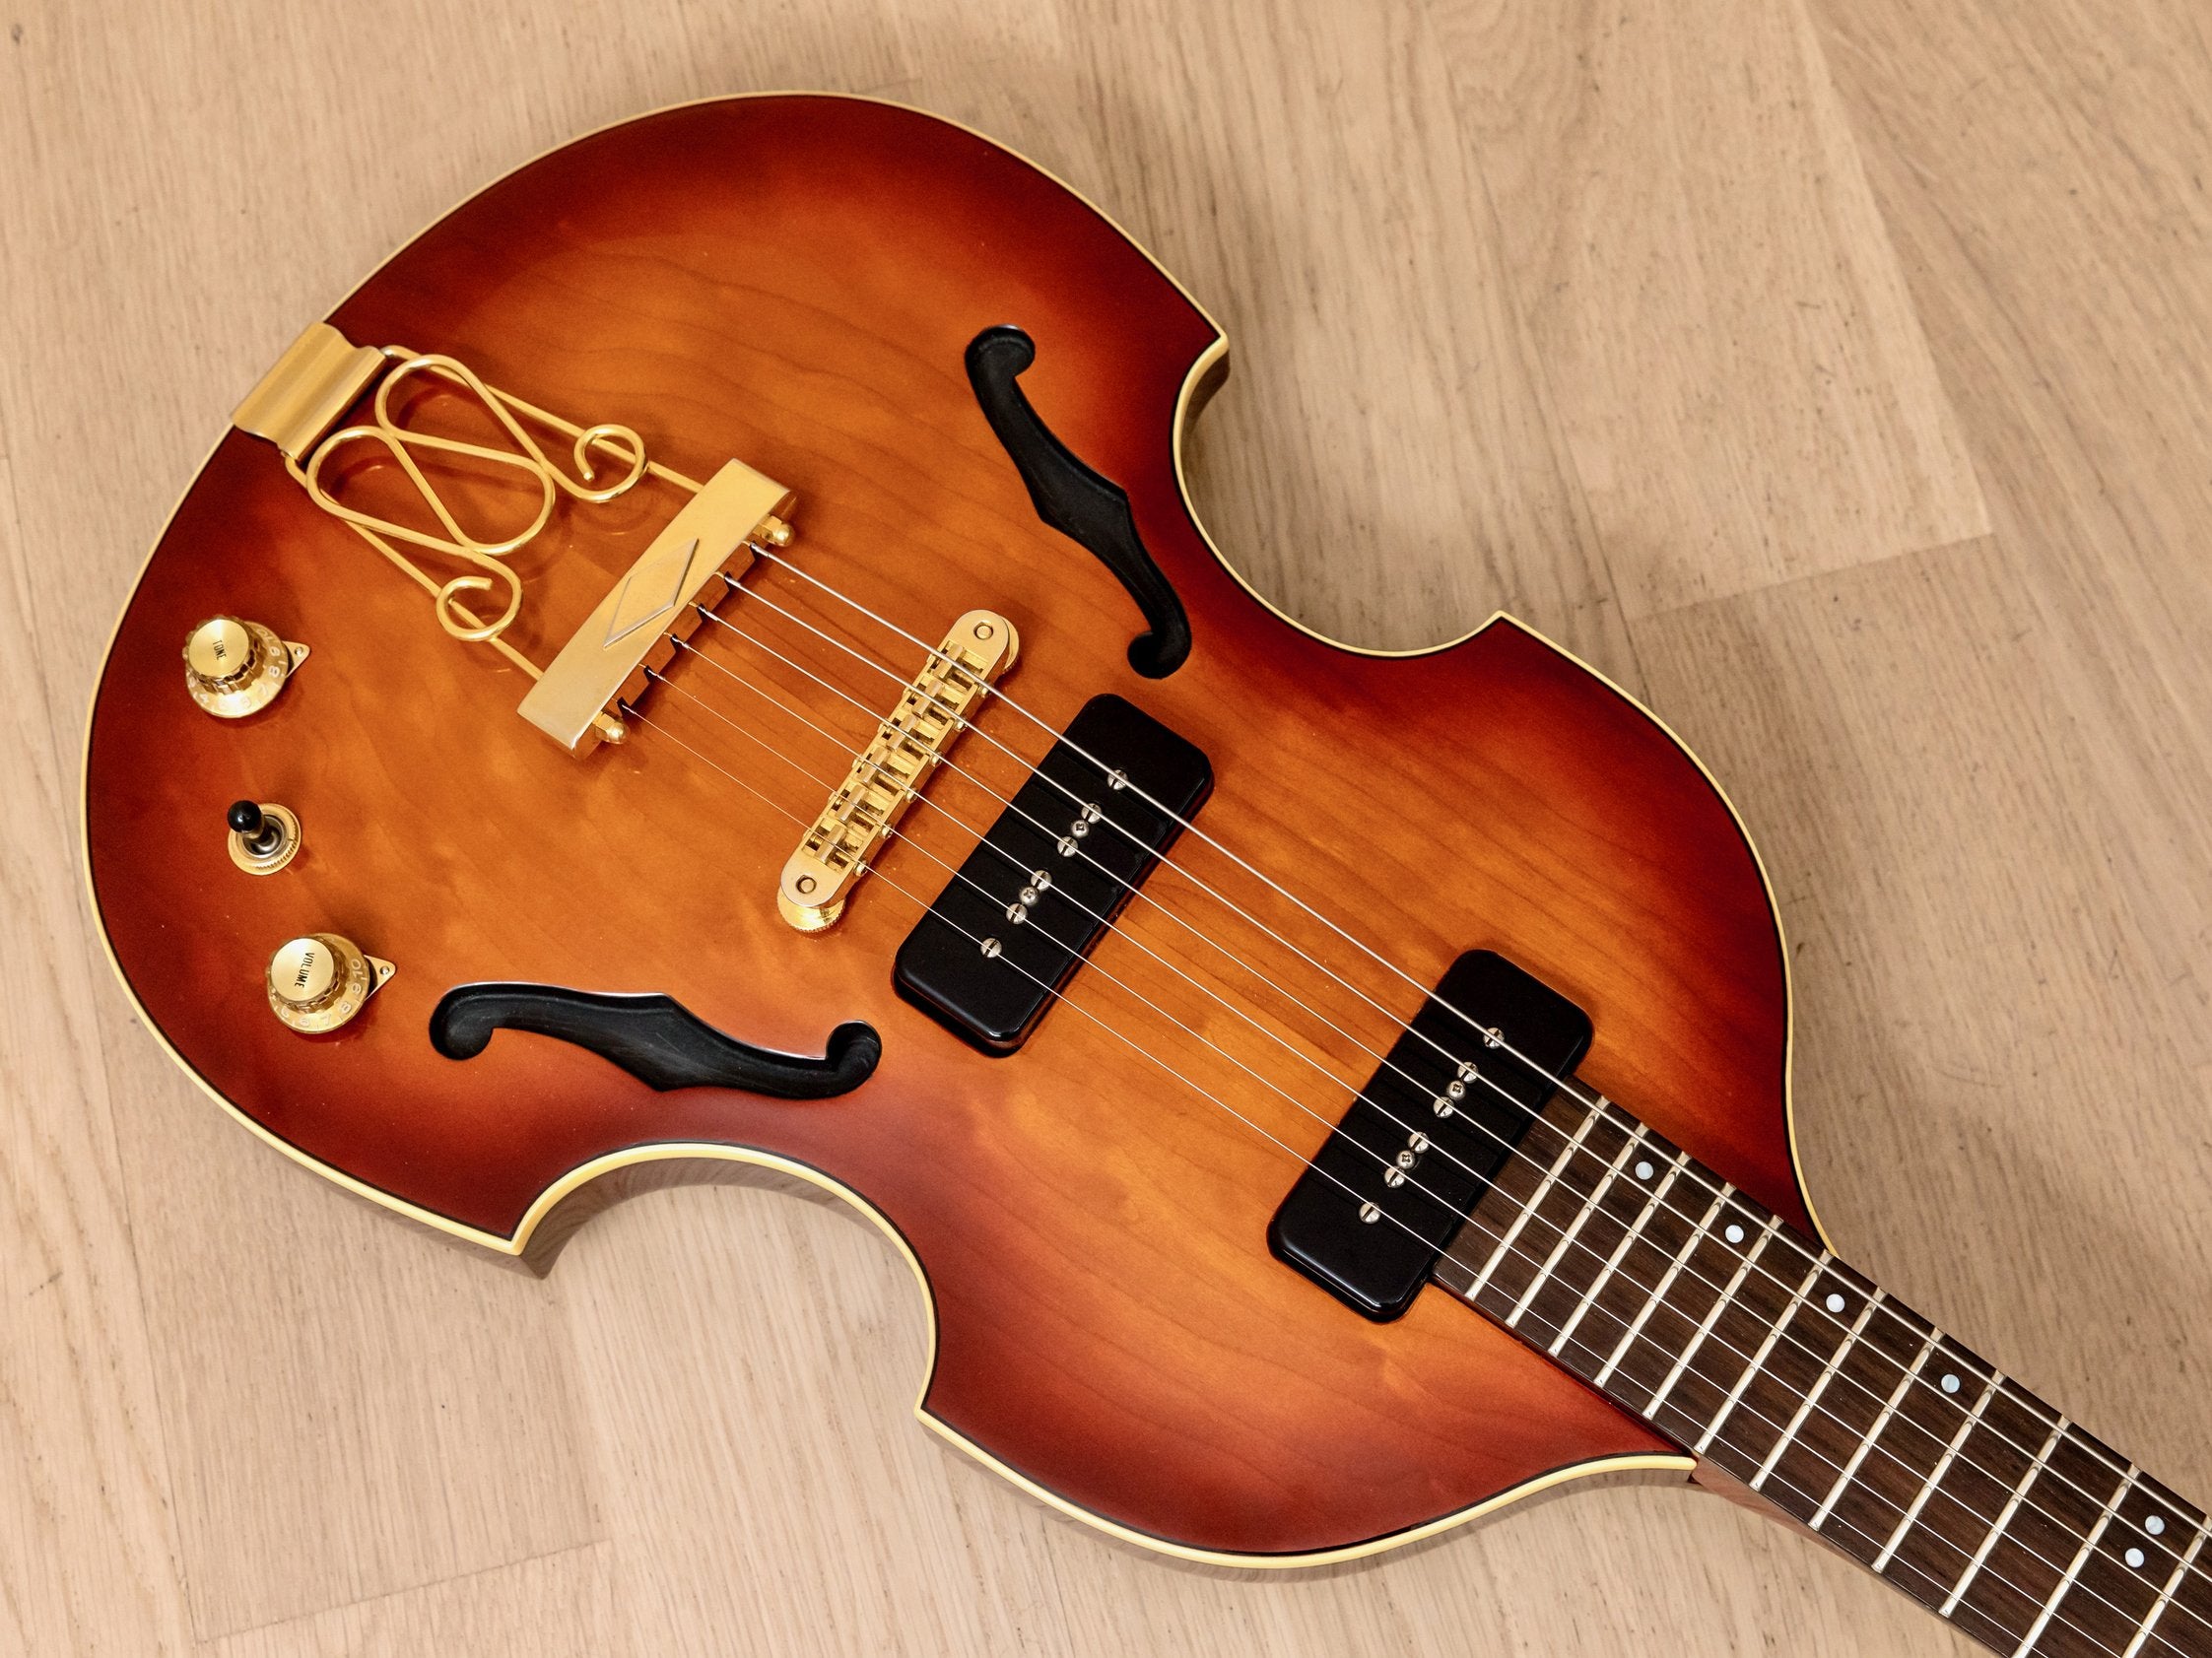 1993 Yamaha VG Standard Aska Signature Model Violin Guitar Sunburst w/ P-90s, Japan